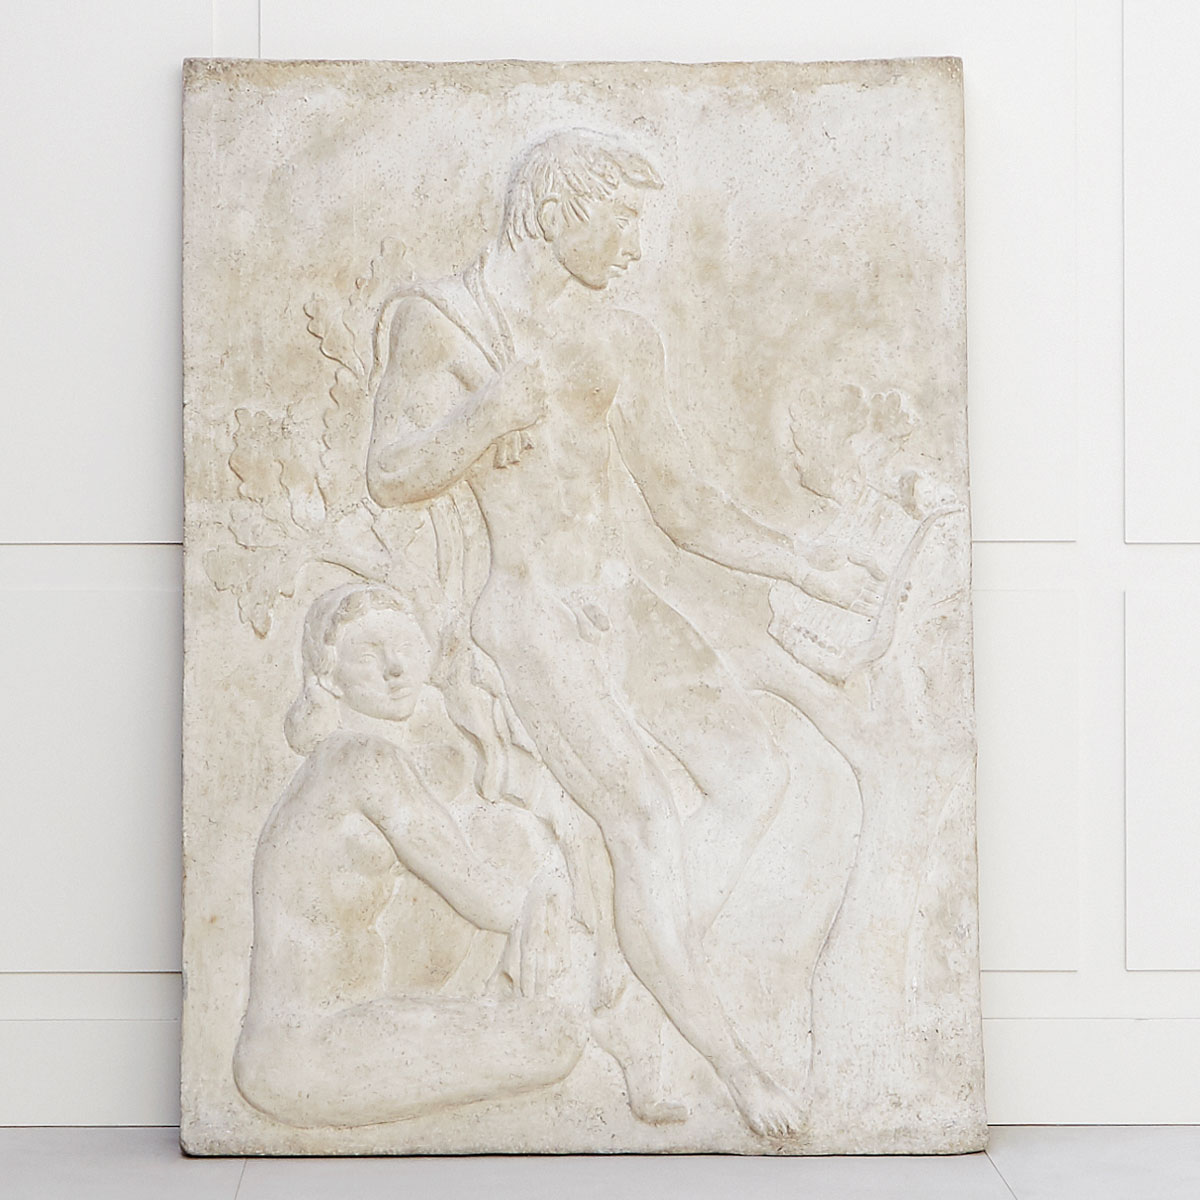 « Orphée & Eurydice » bas-relief